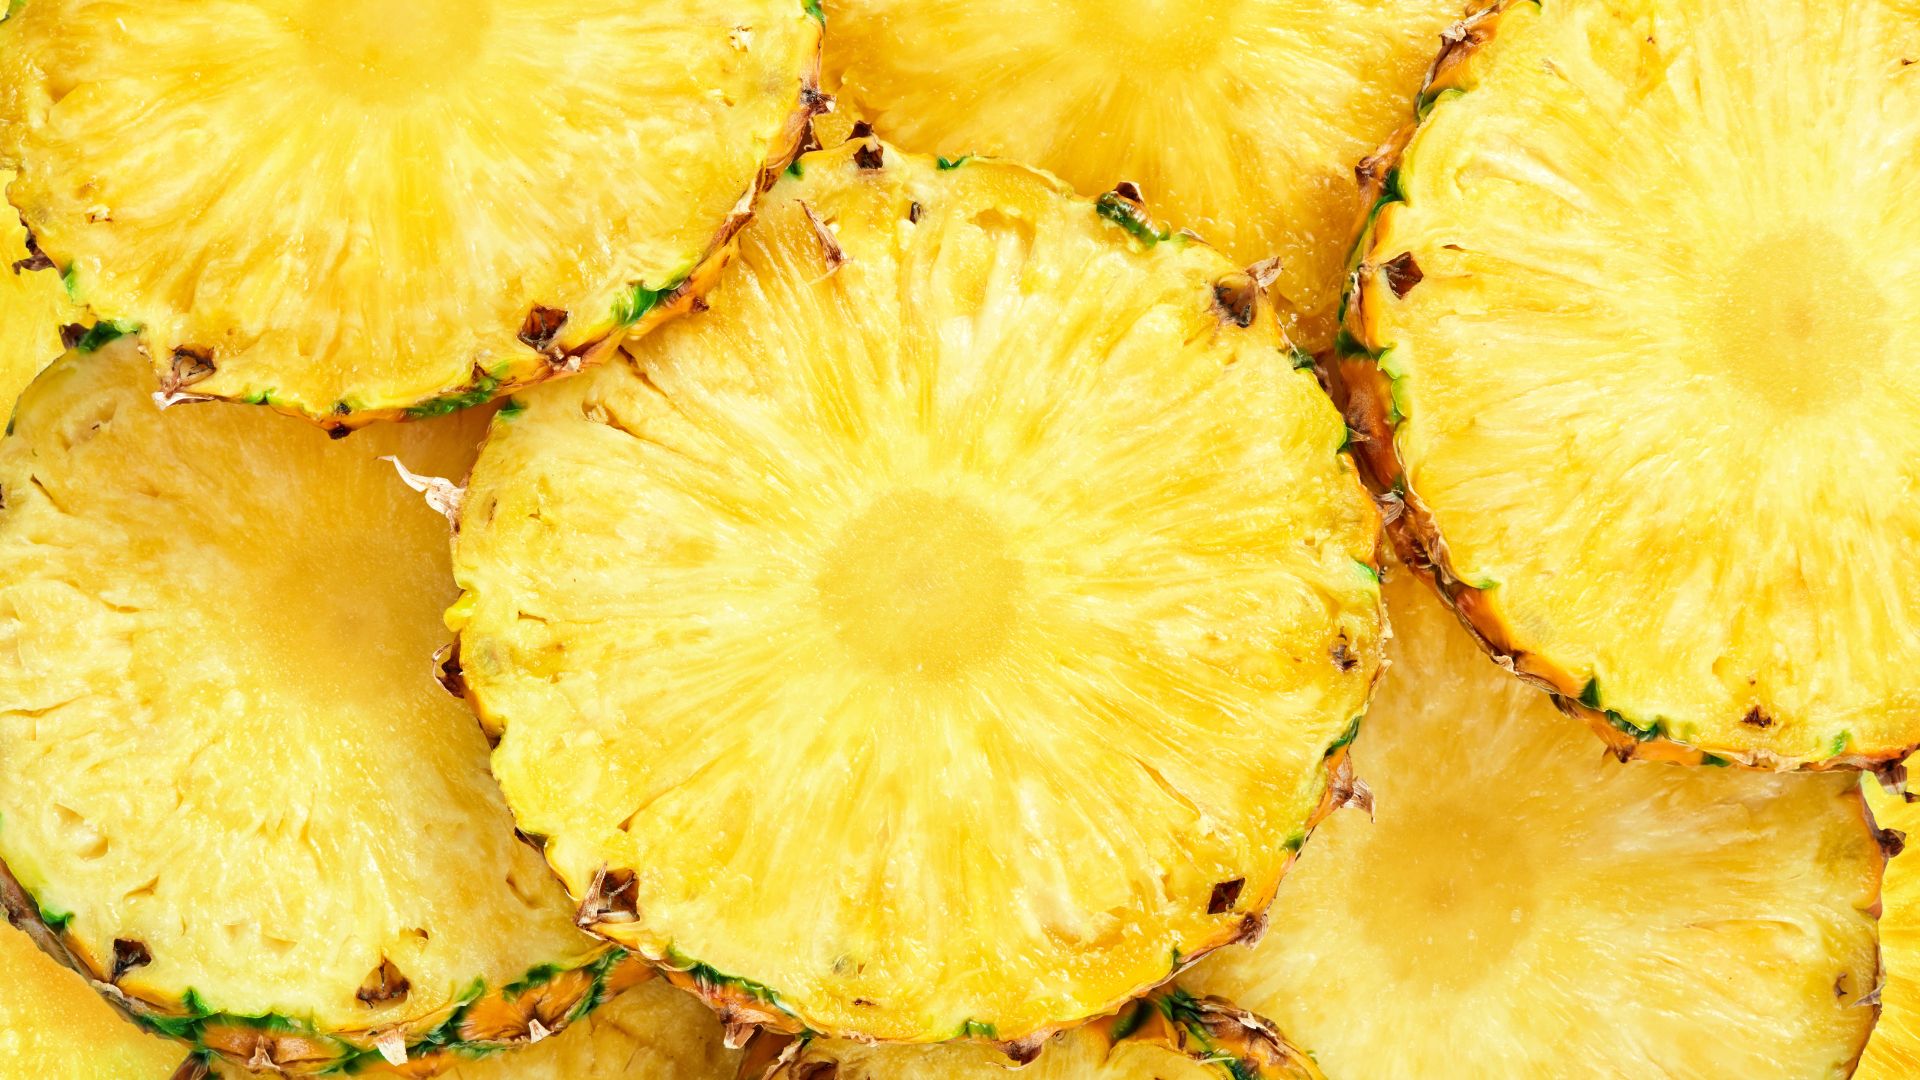 Why do we put salt in pineapple?